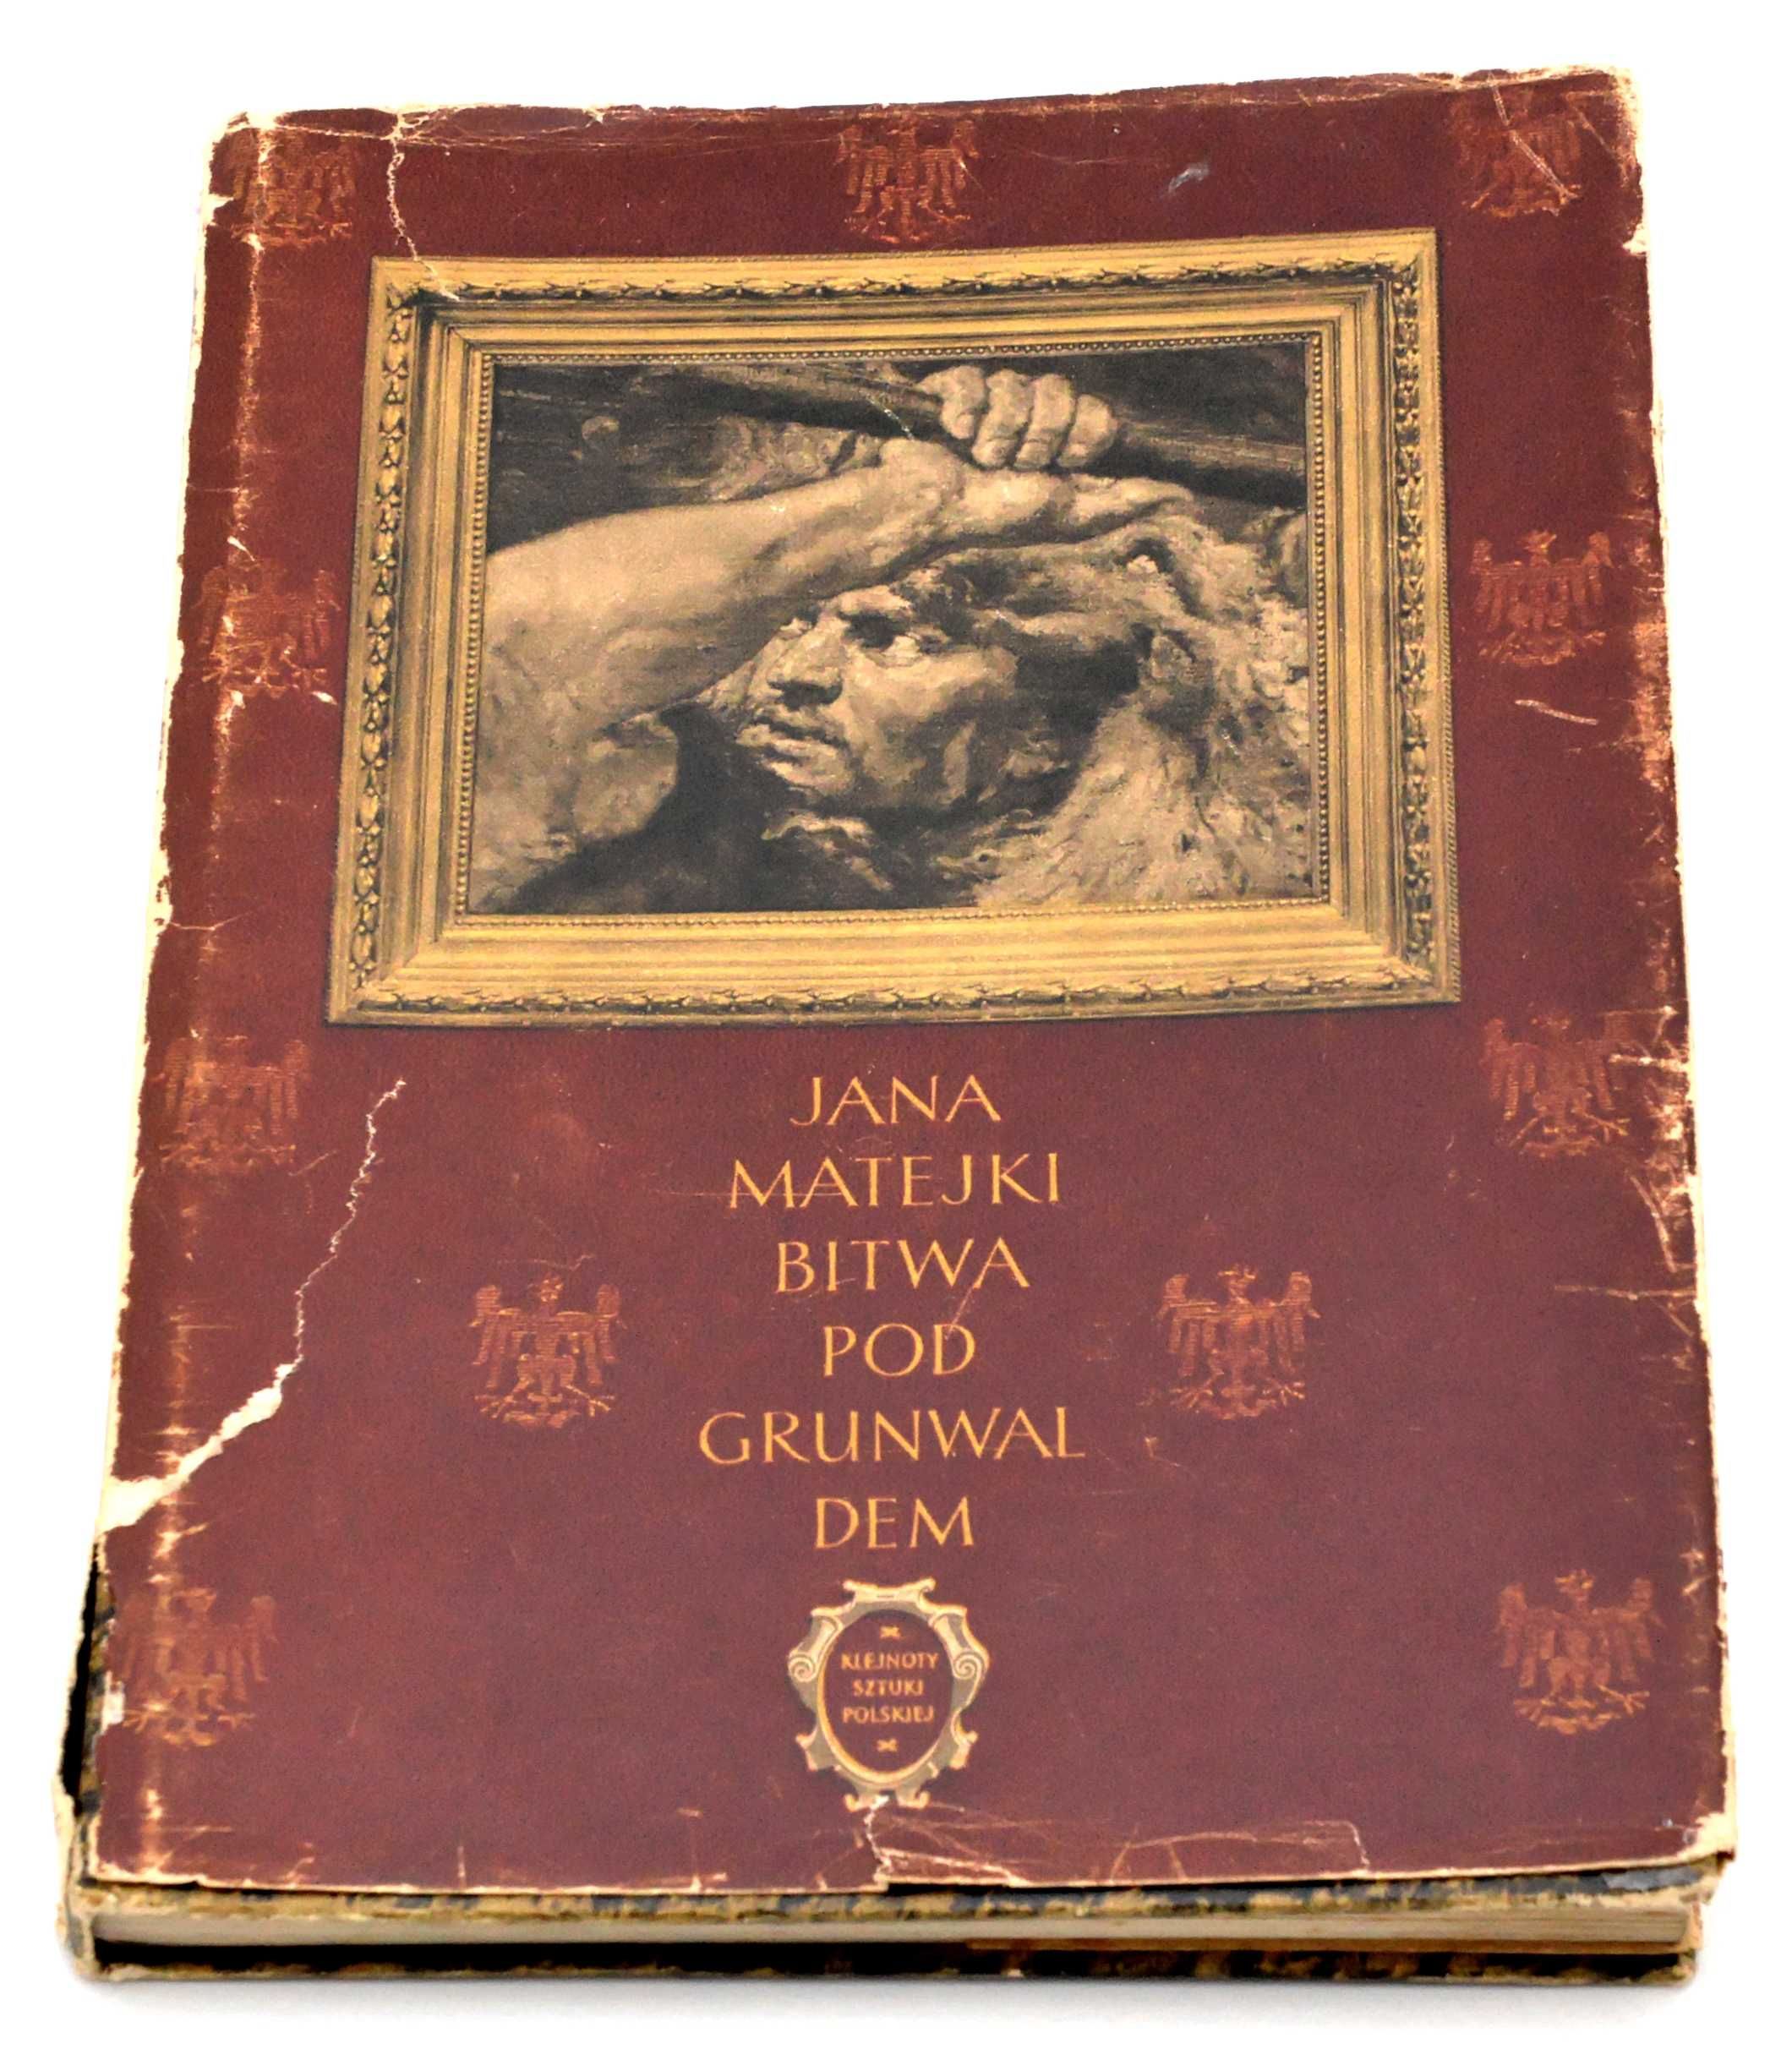 Jana Matejki Bitwa pod Grunwaldem PIW 1953